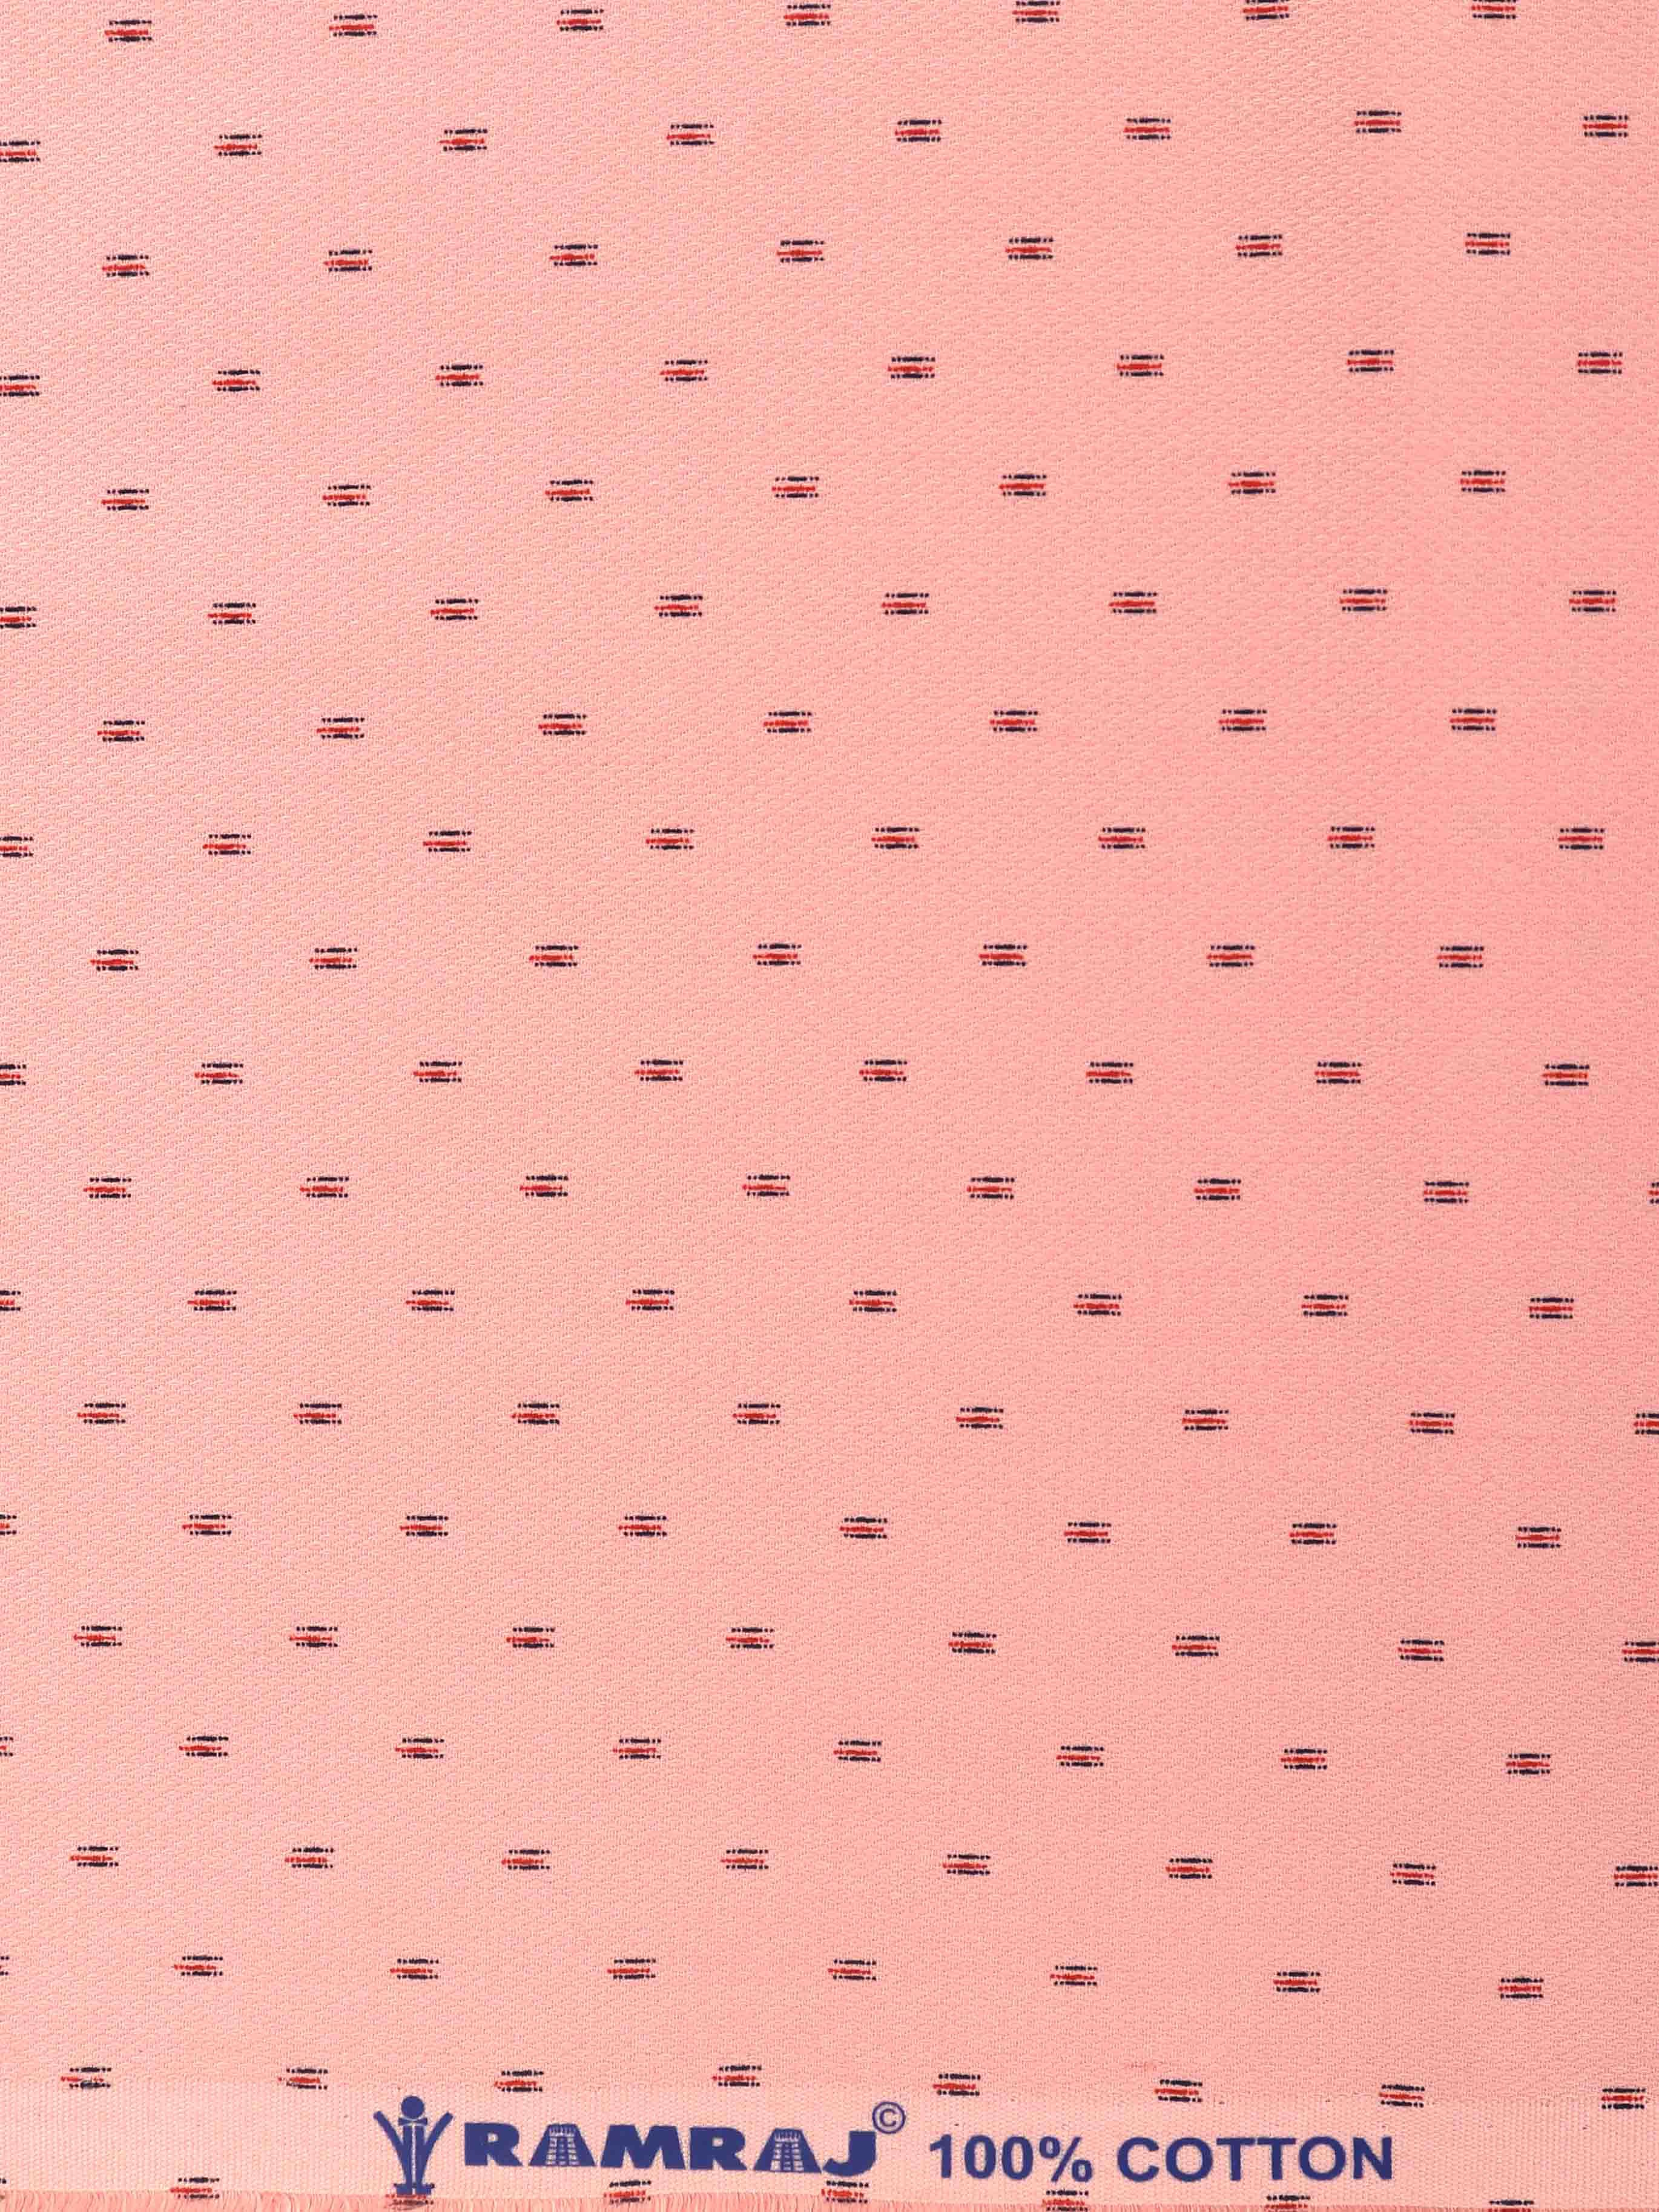 Cotton Colour Printed Shirt Fabric Pink KCP6063 -  Ramraj Cotton